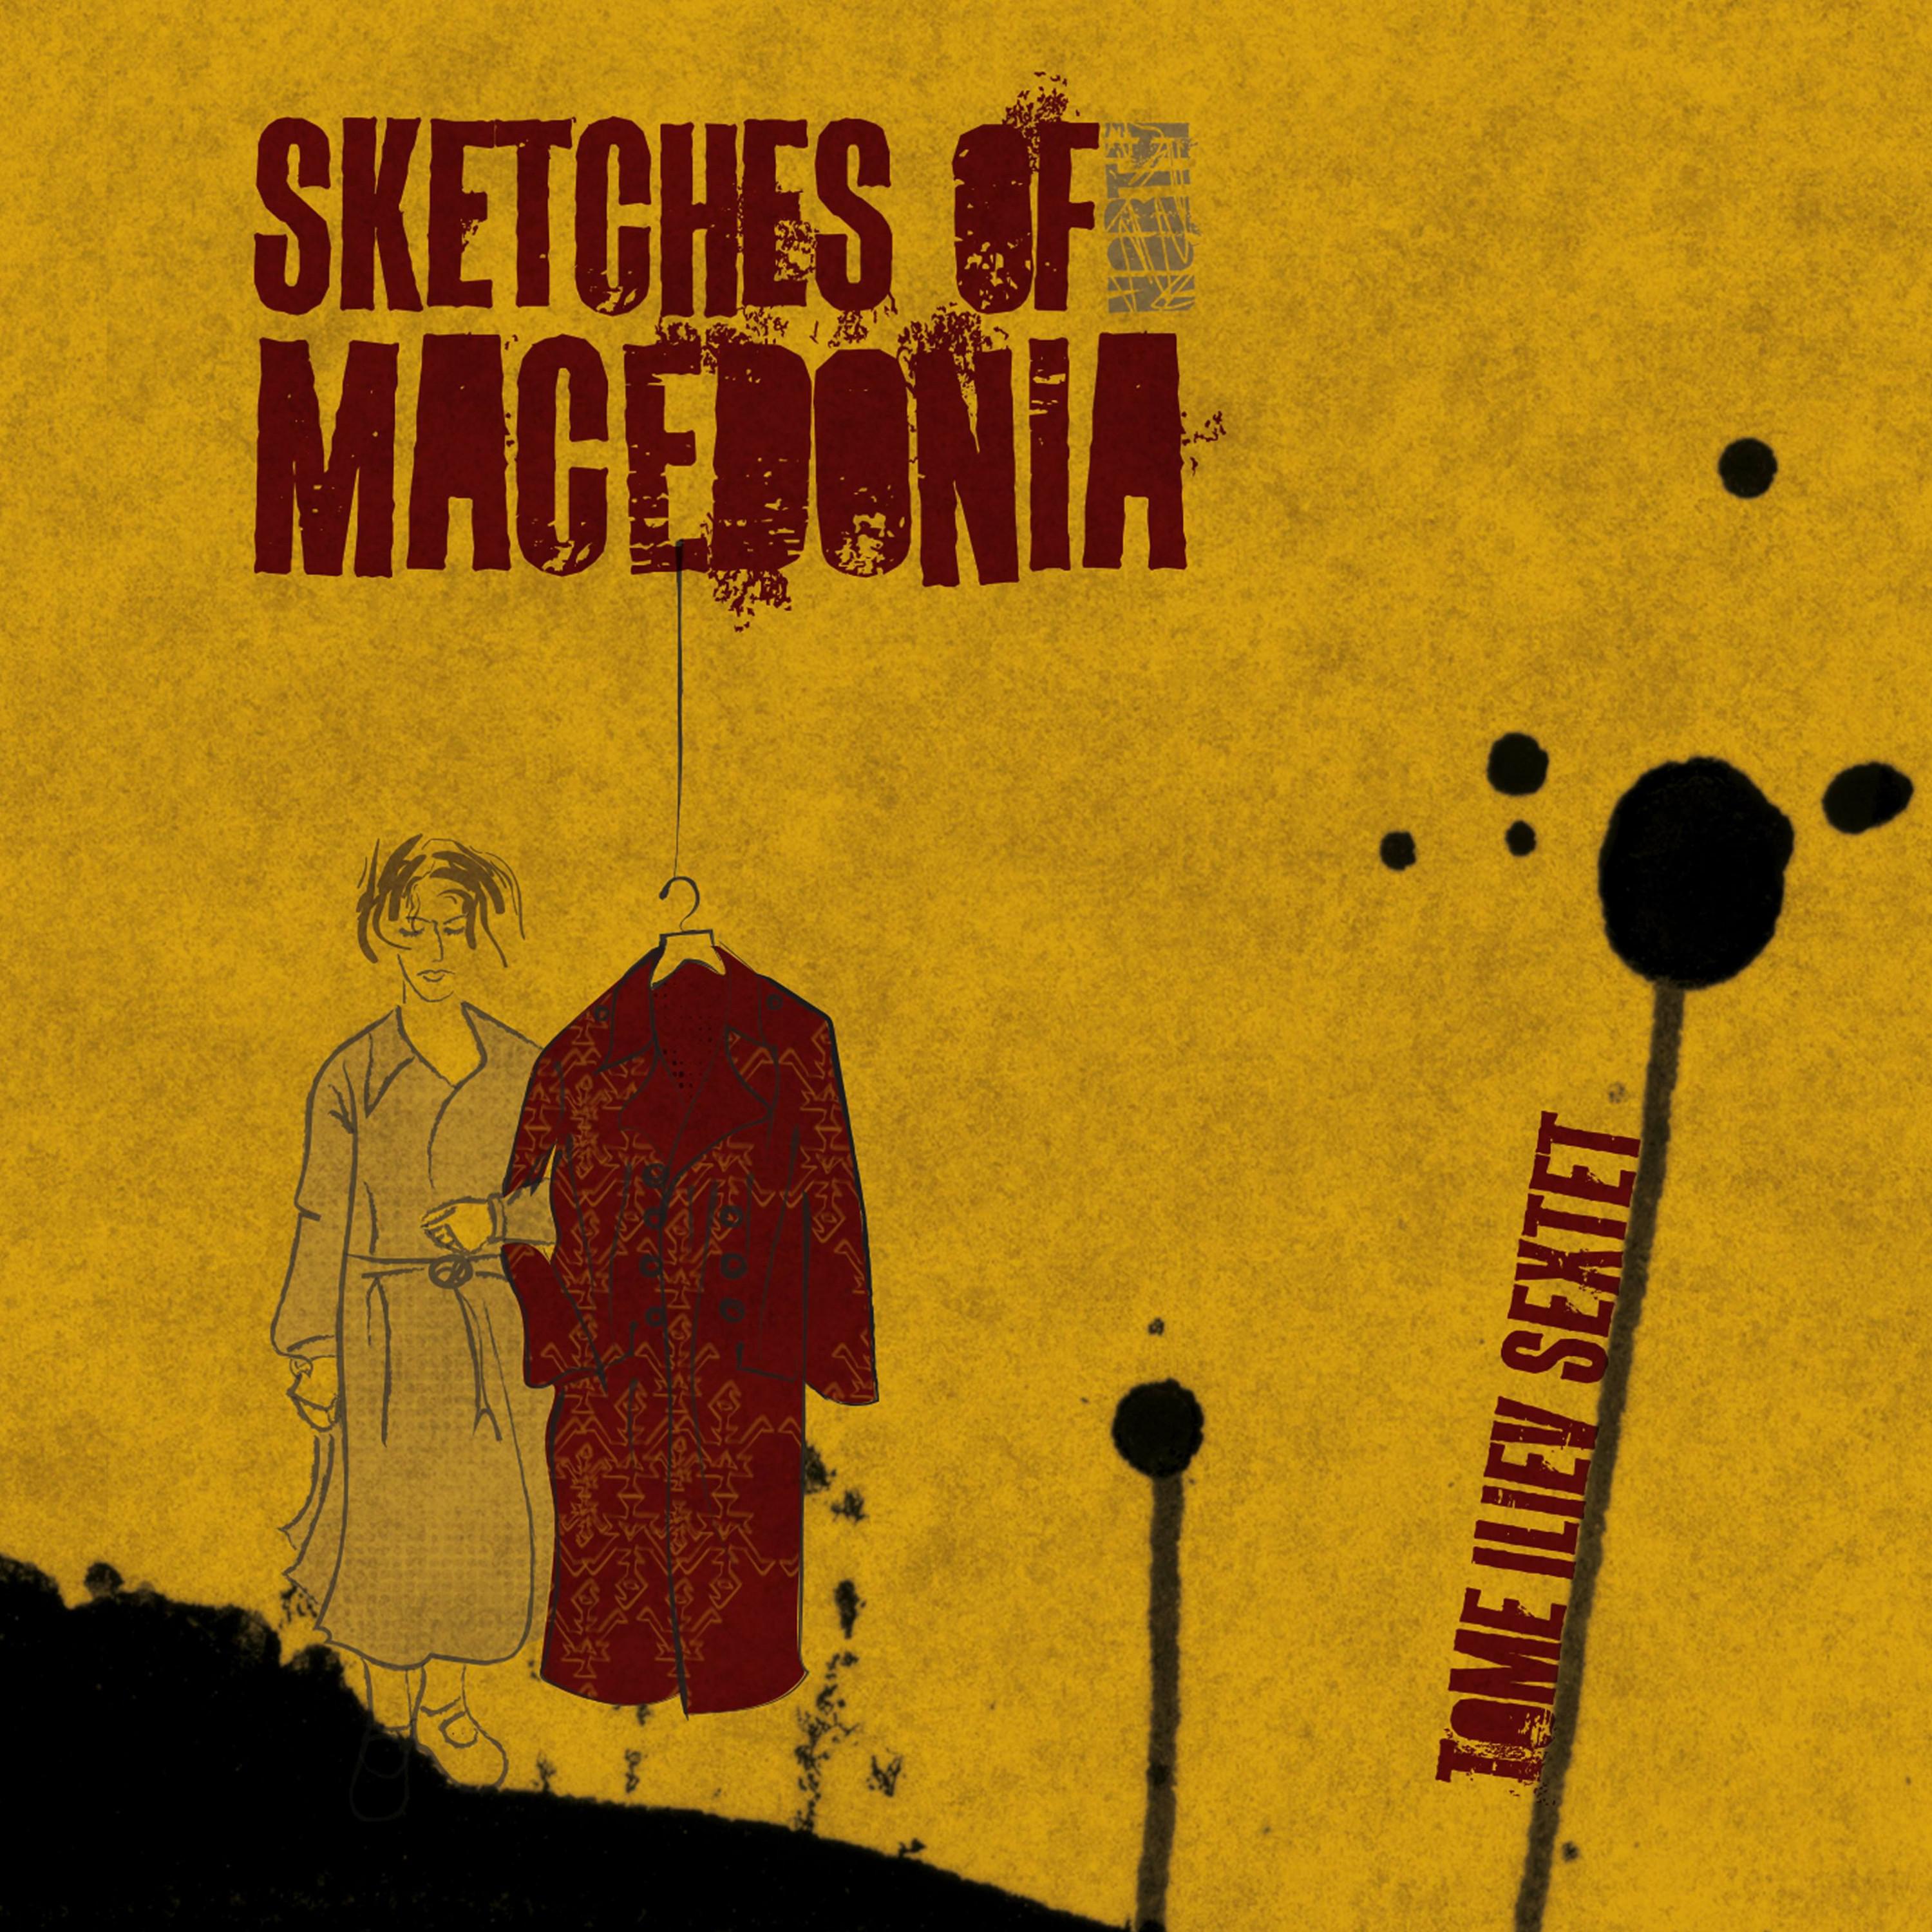 Sketches of Macedonia